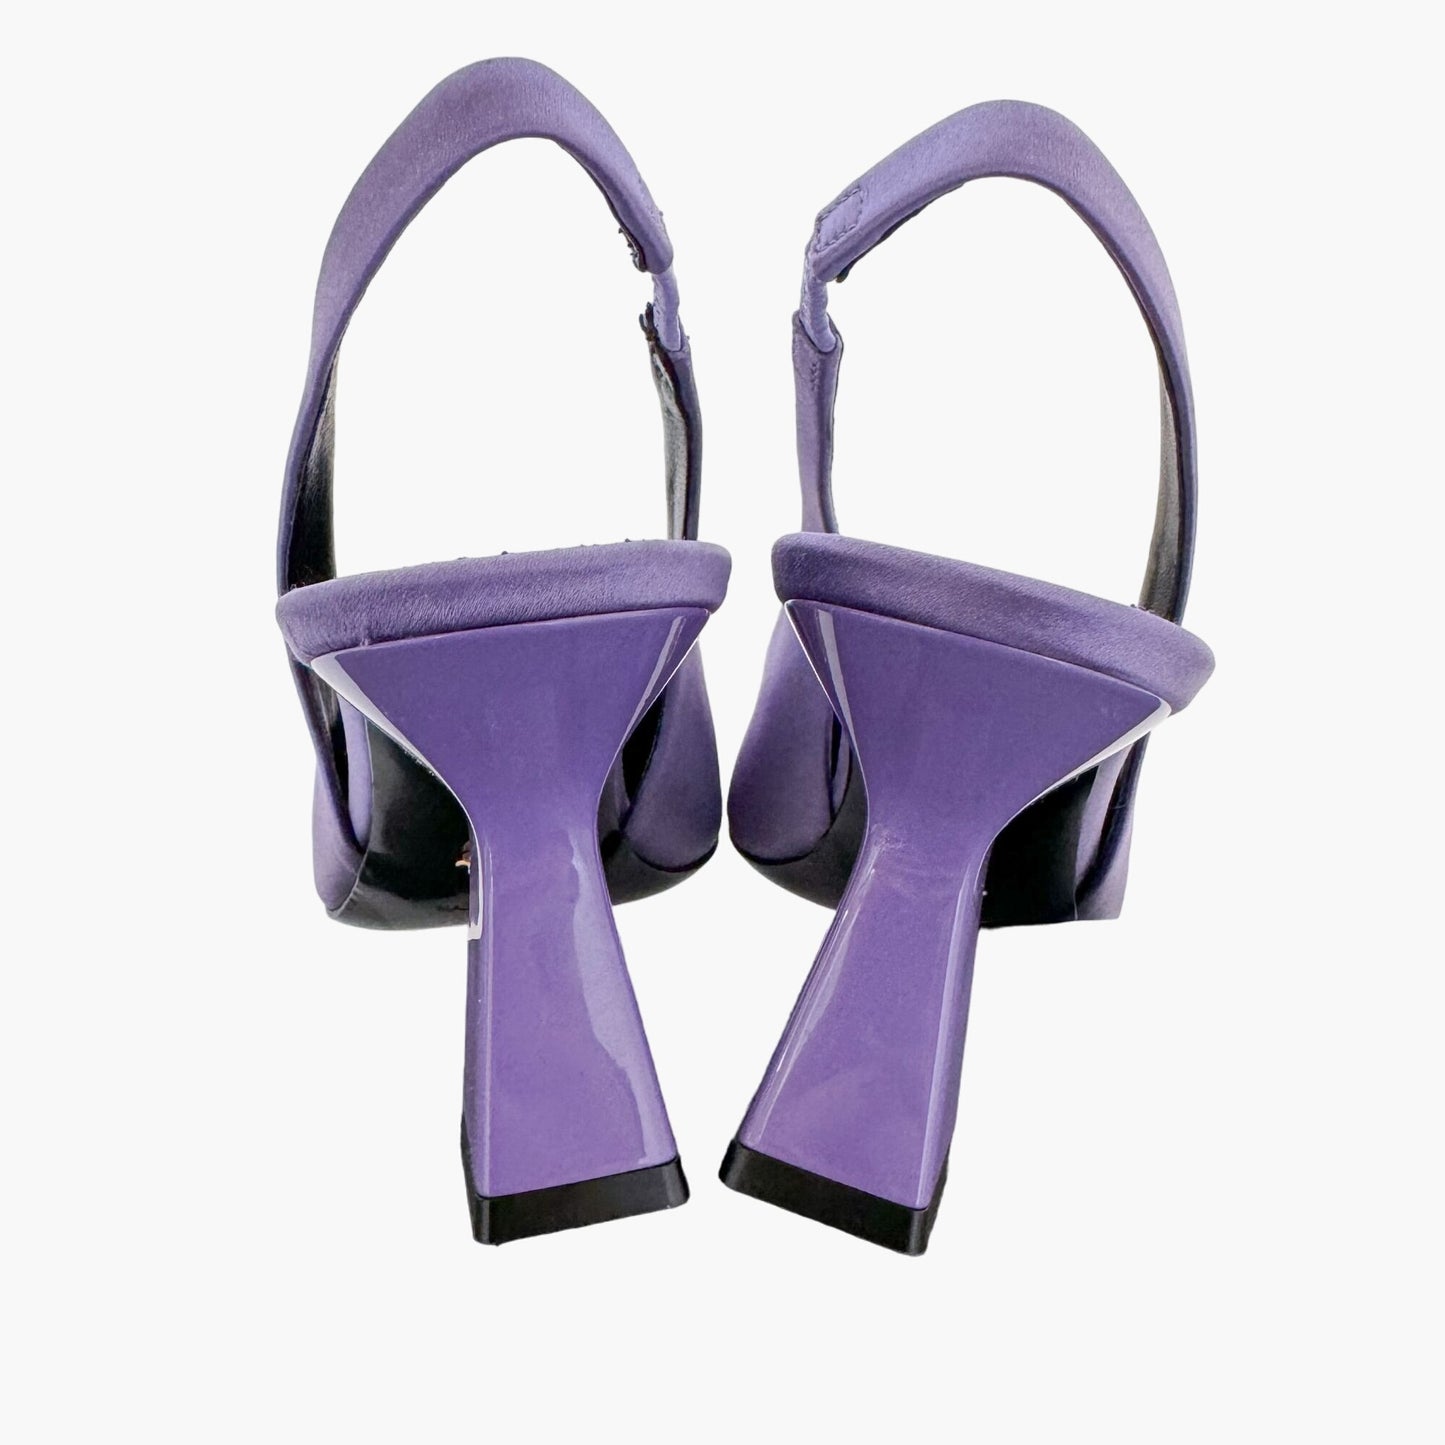 Versace La Medusa Slingback Pumps in Purple Satin Size 37